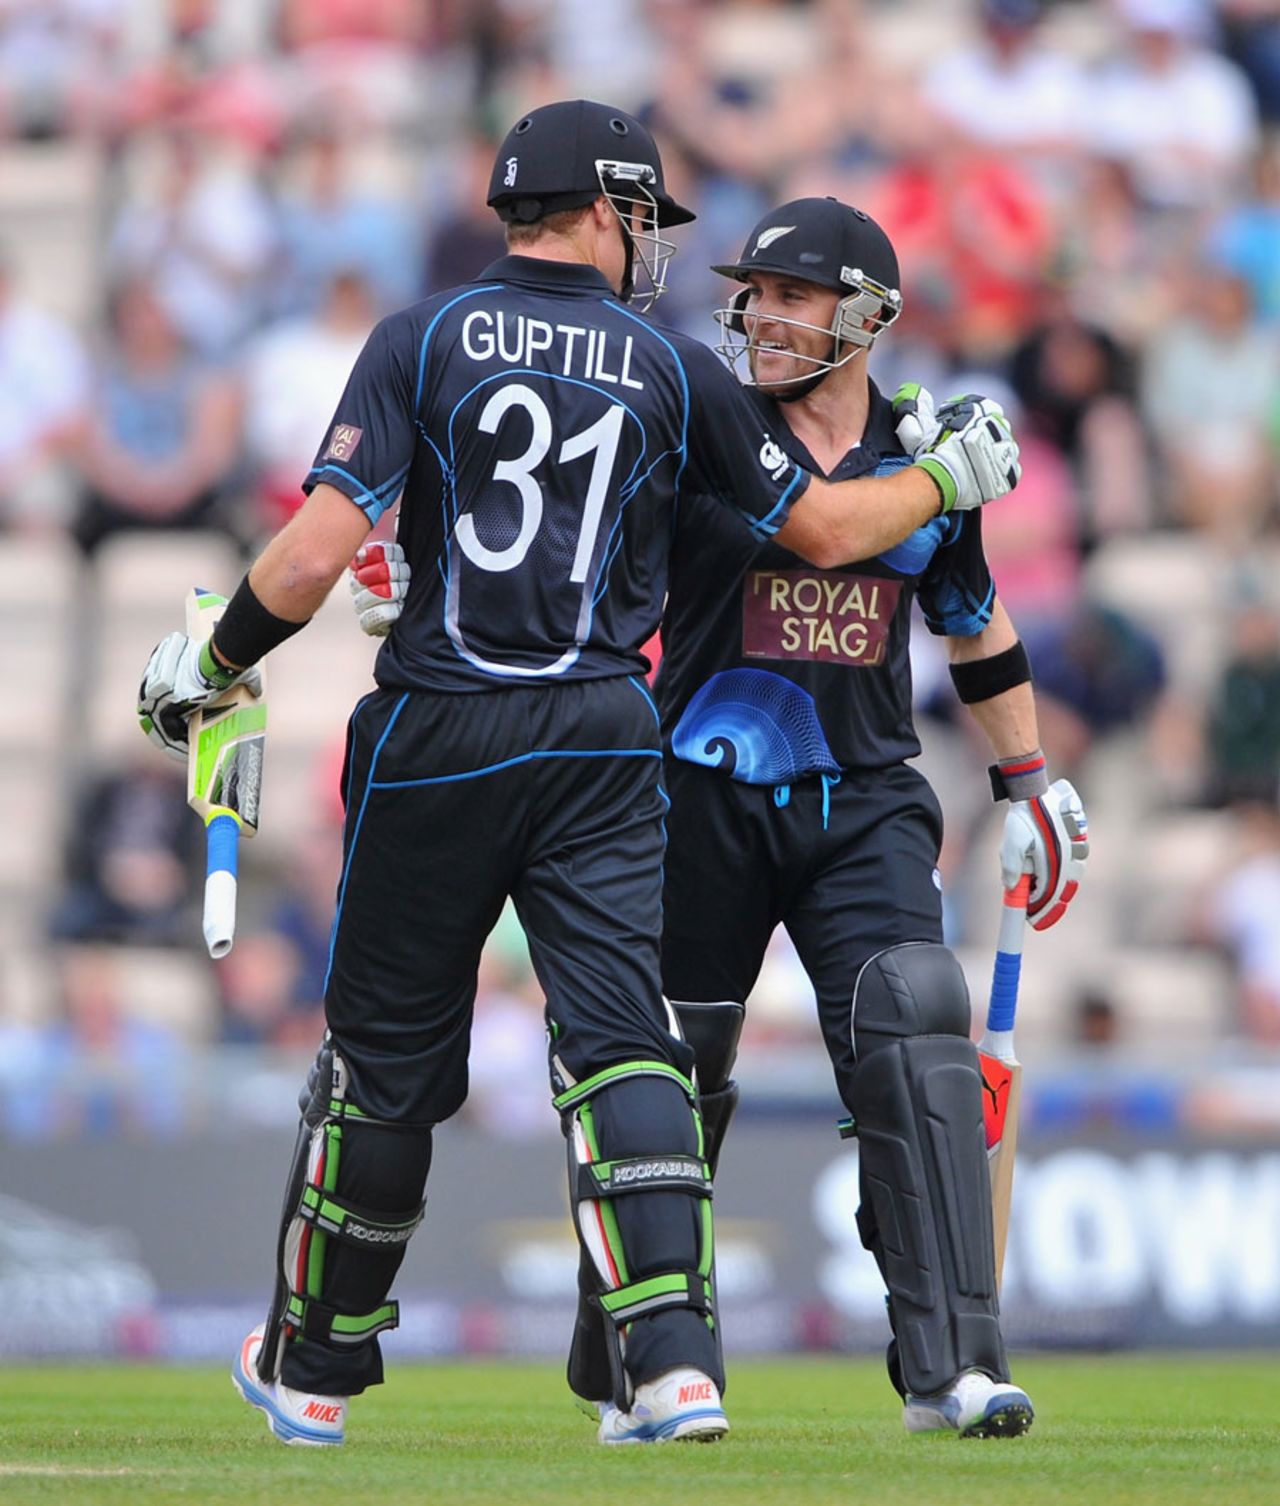 Martin Guptill and Brendon McCullum put on 118 in just 50 balls, England v New Zealand, 2nd ODI, Ageas Bowl, June 2, 2013